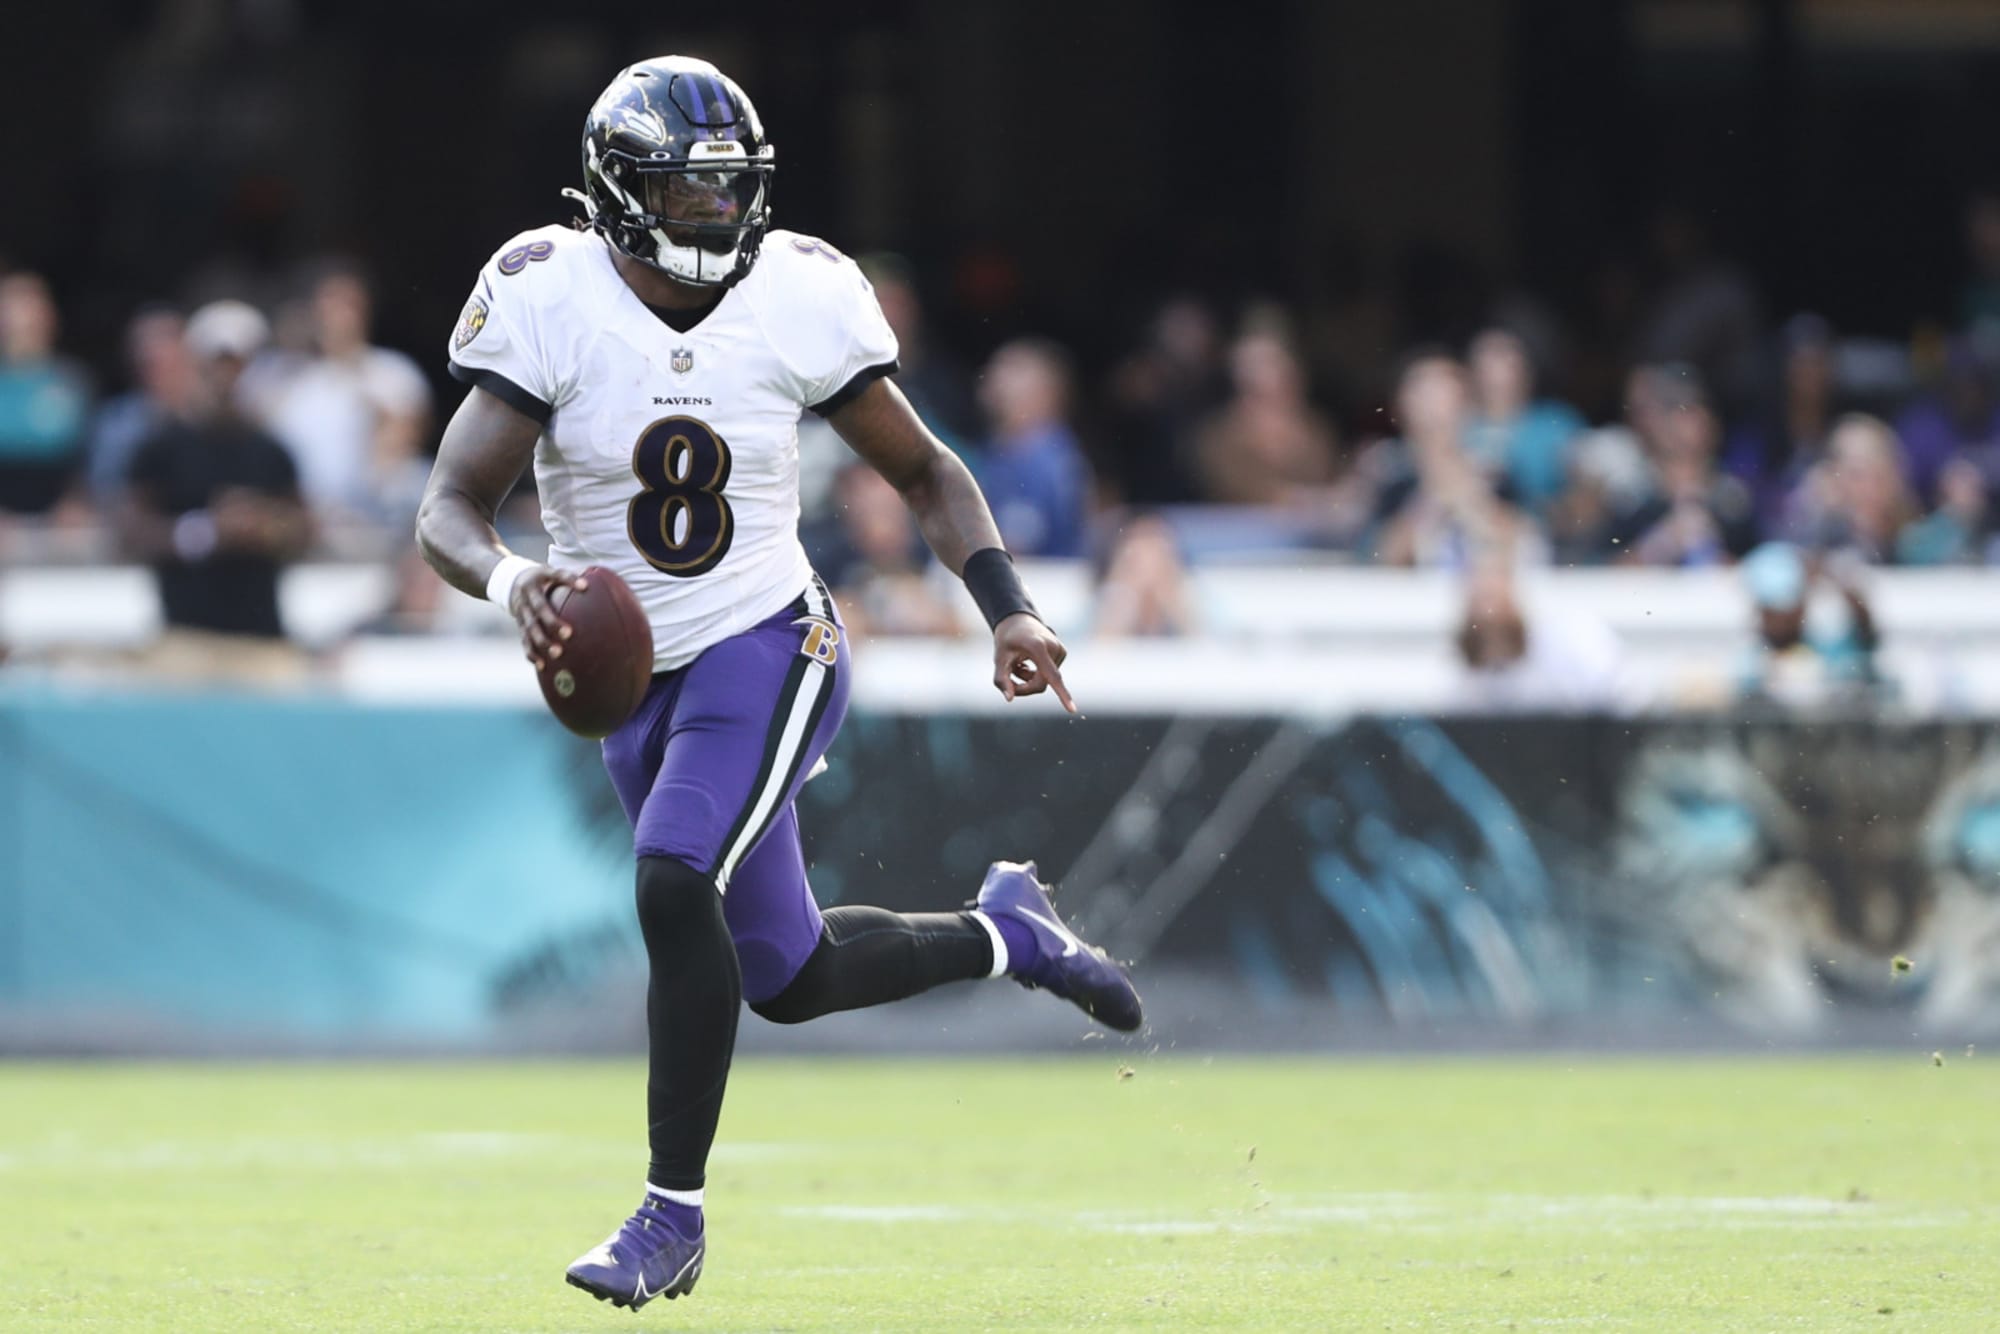 BREAKING: Ravens still want Lamar Jackson to run this season